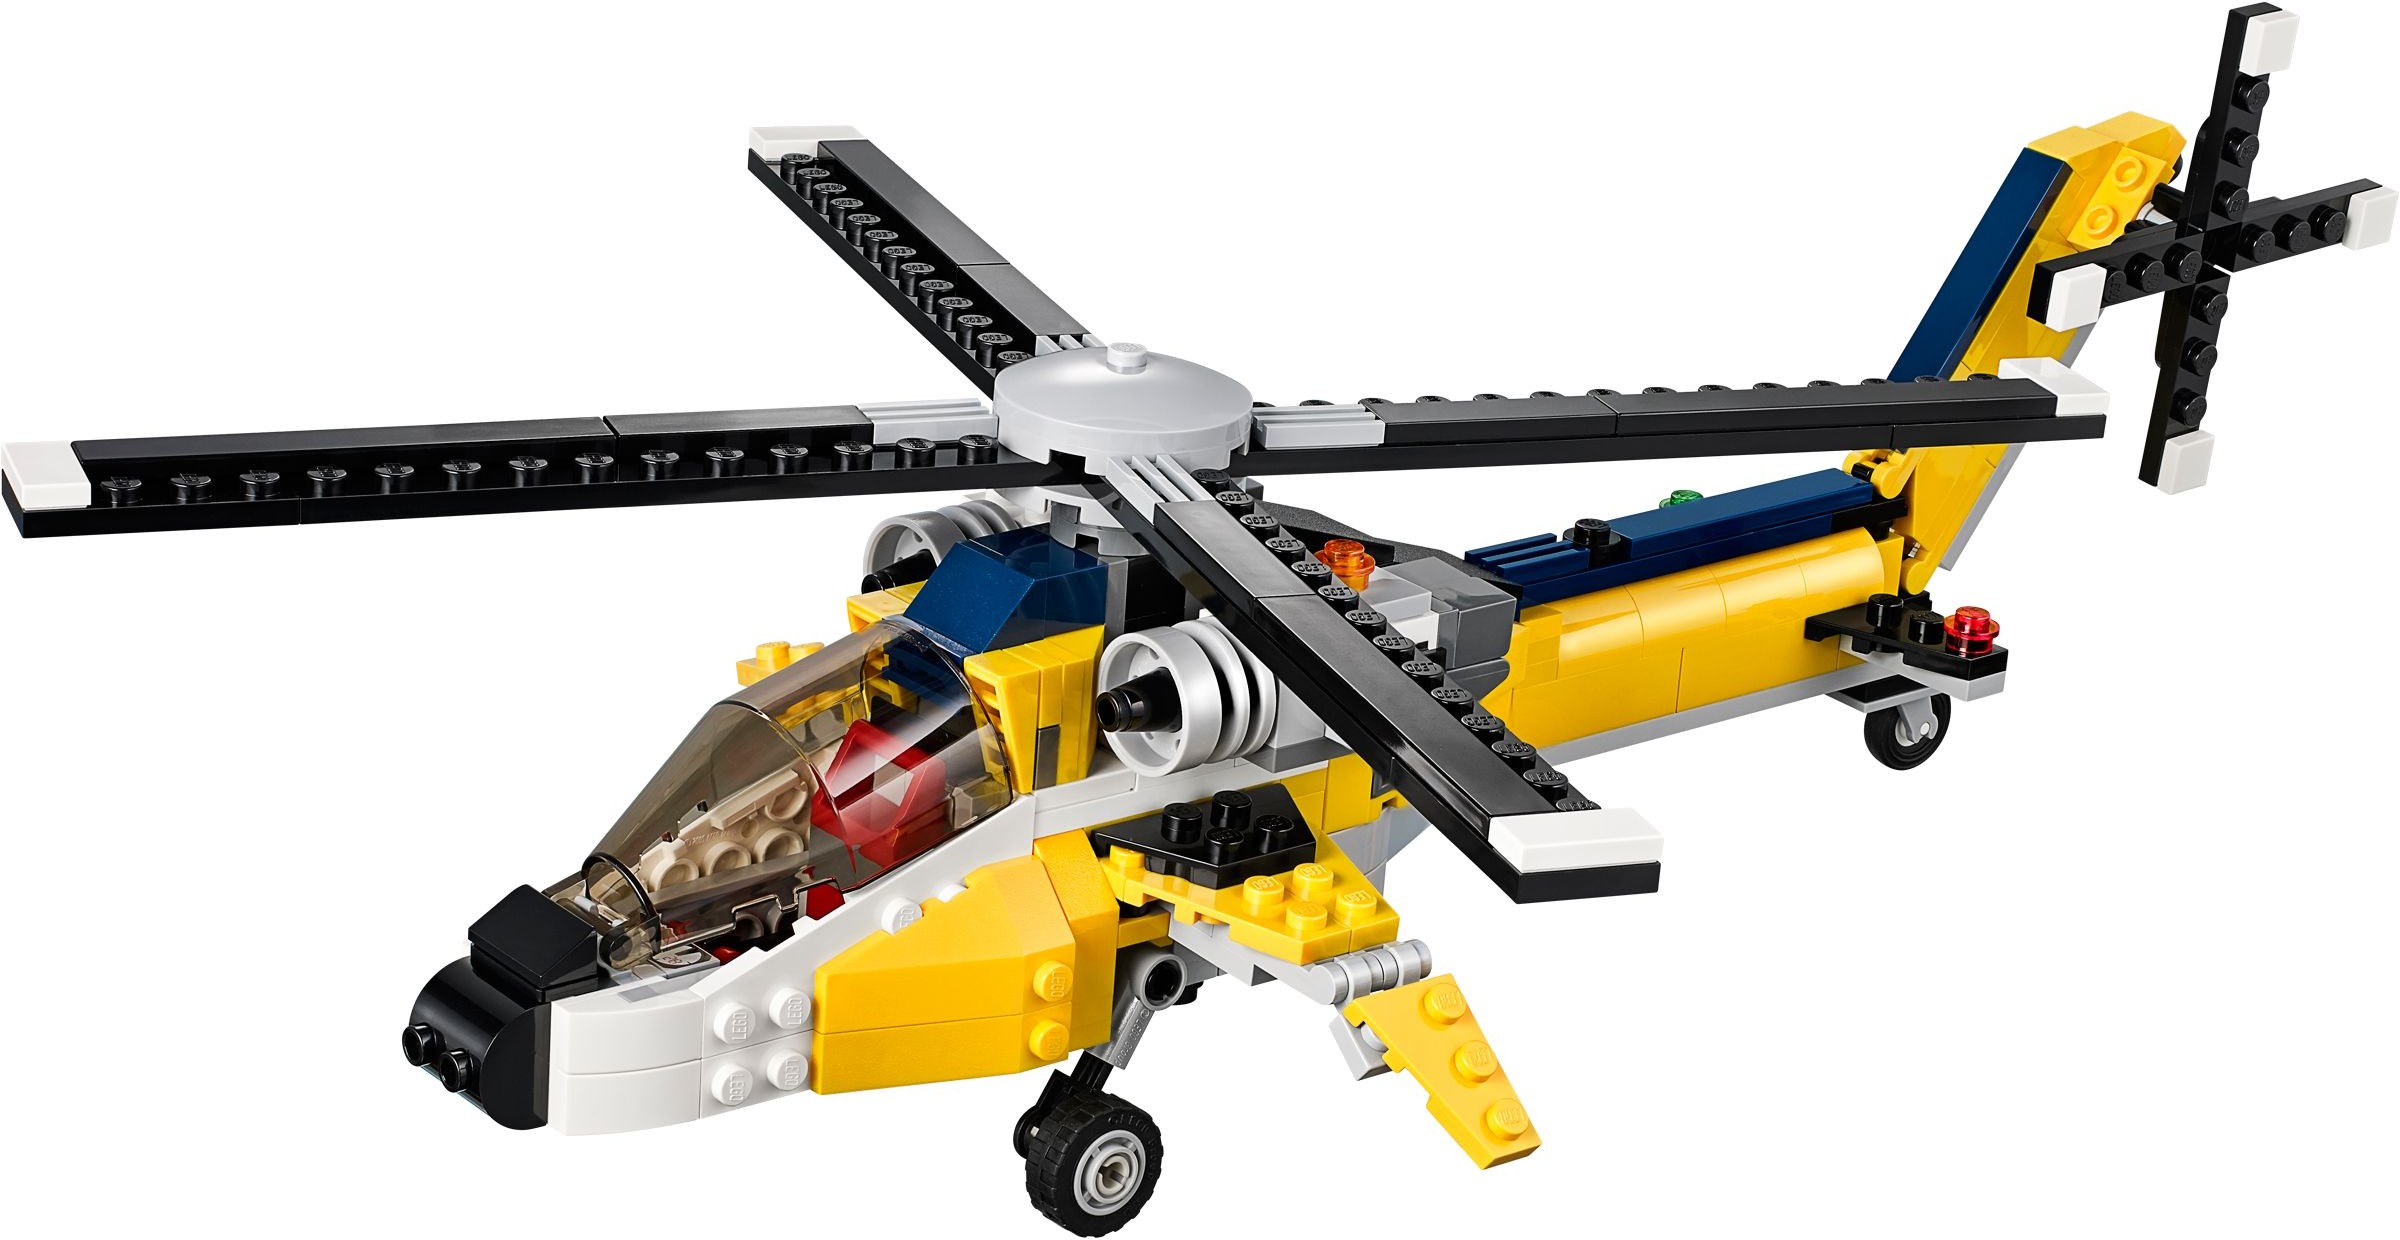 designed by Mike Brickset: LEGO set guide database